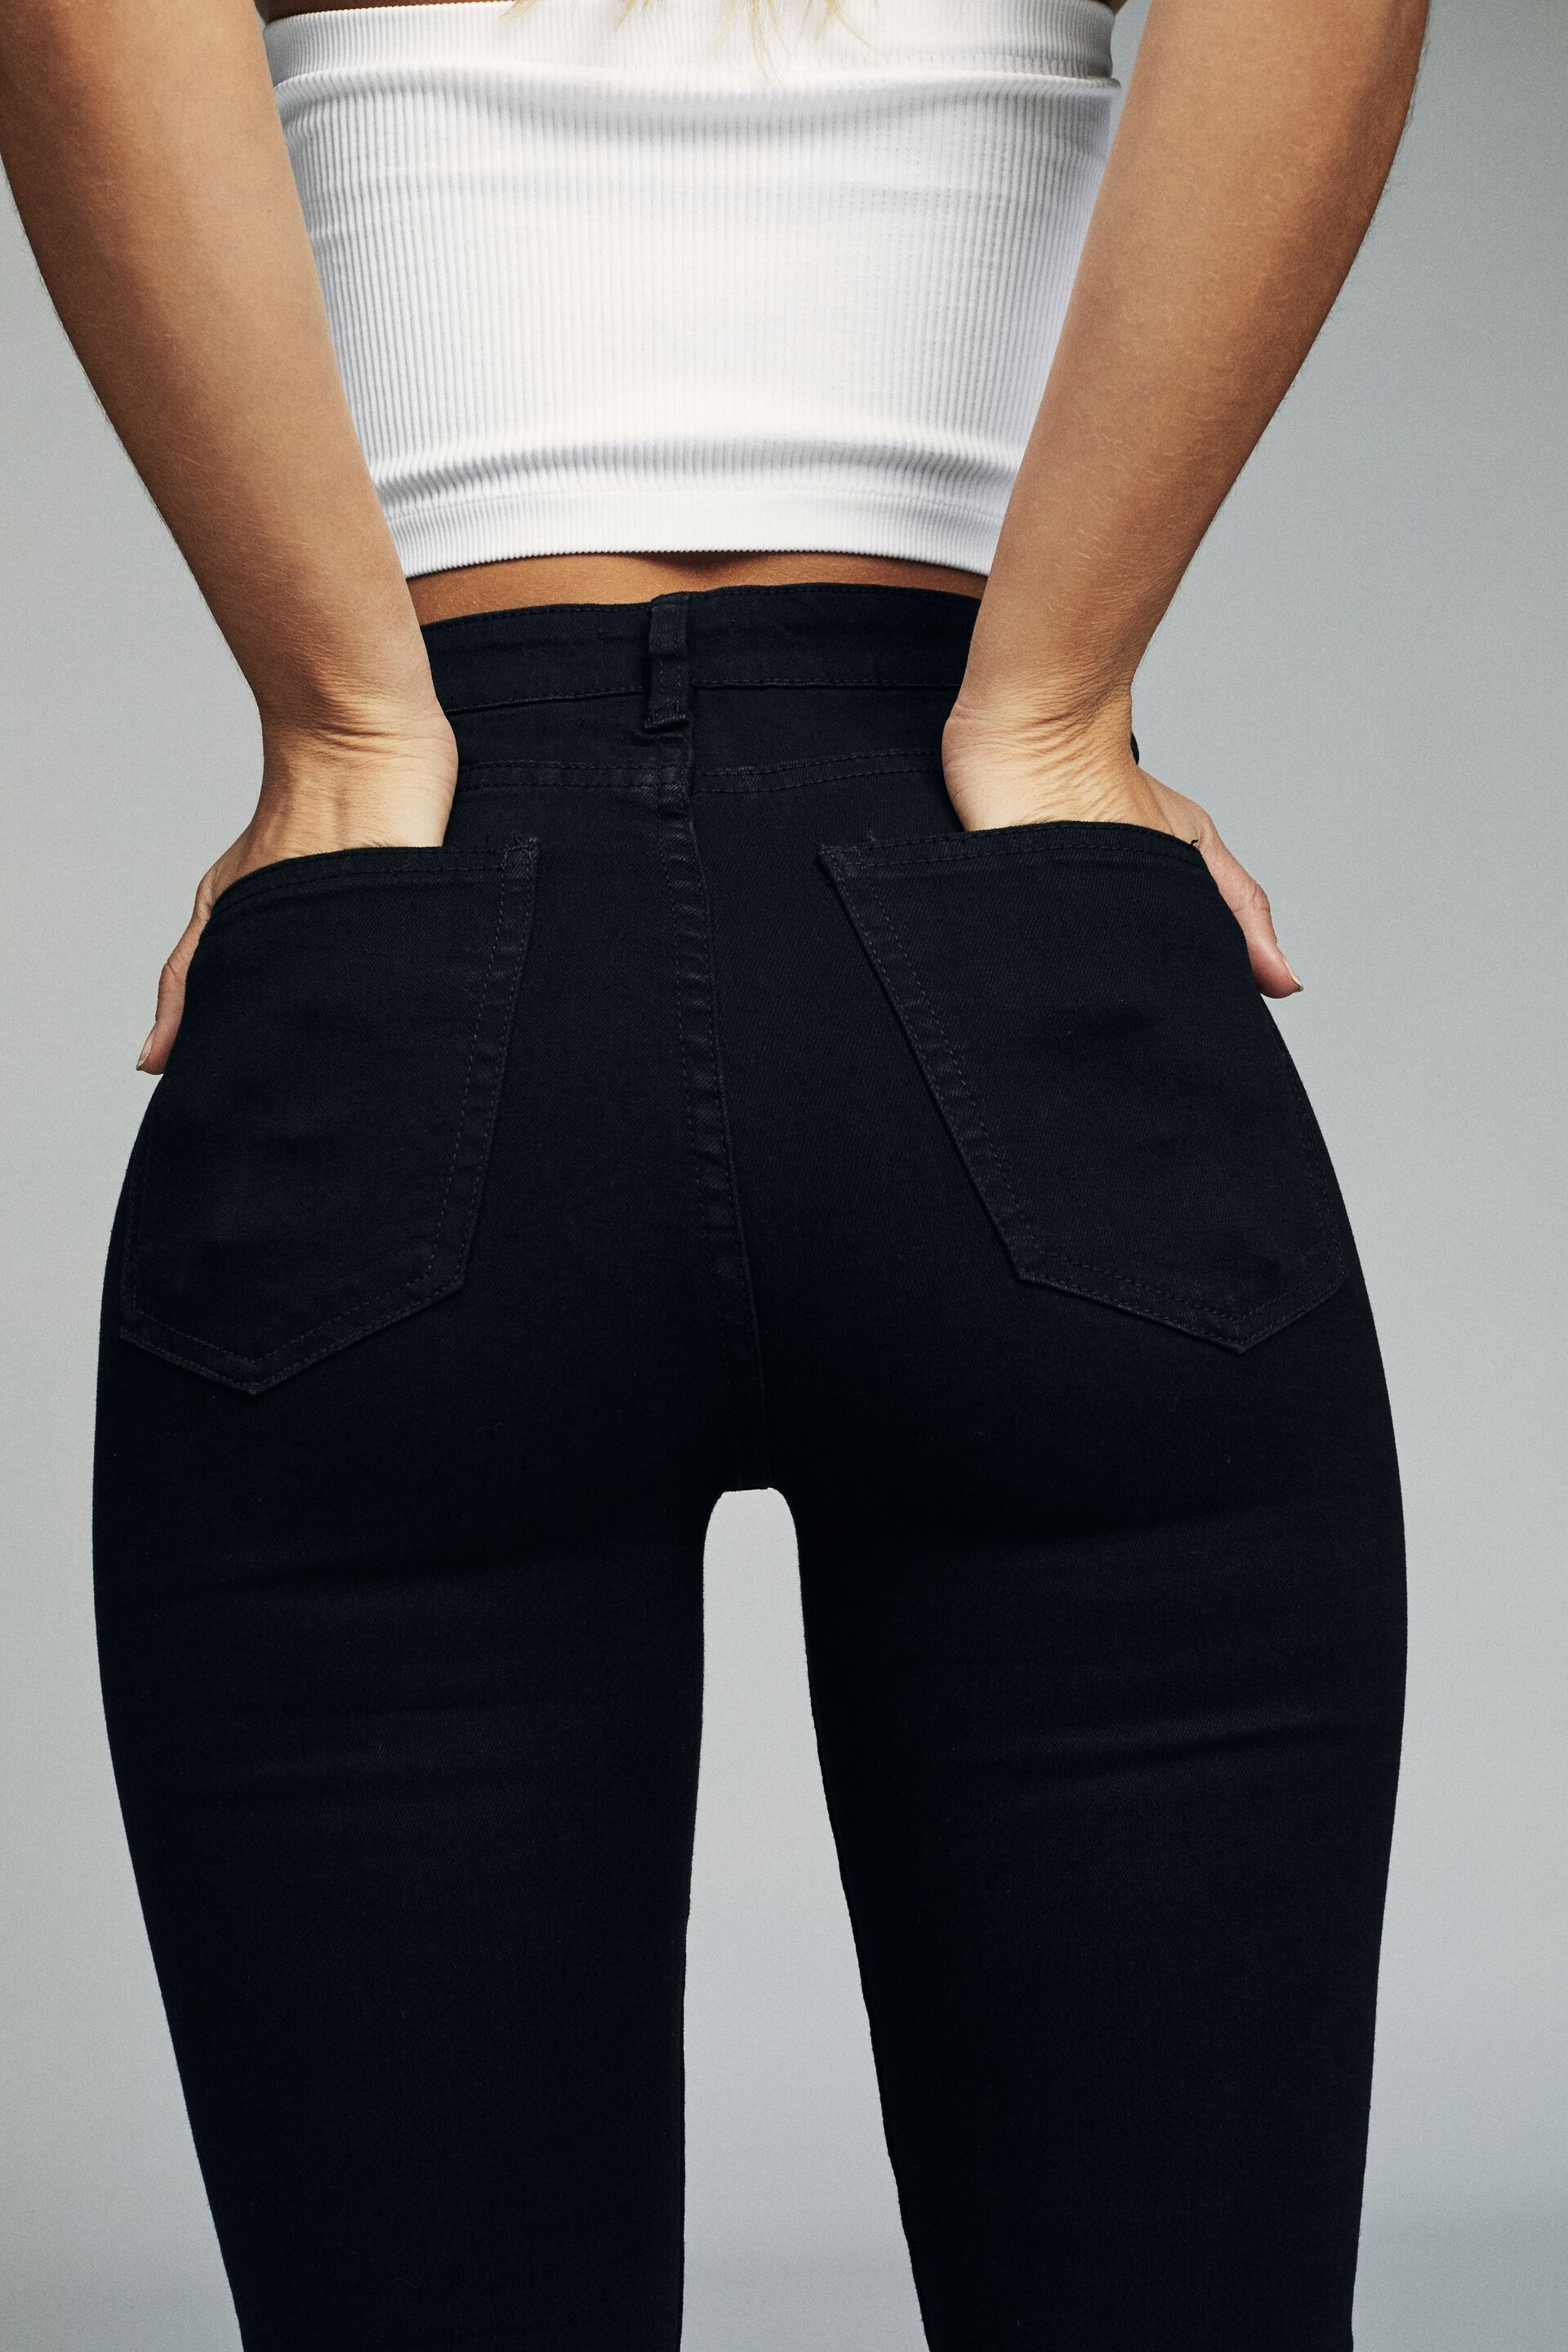 women's high rise black pants